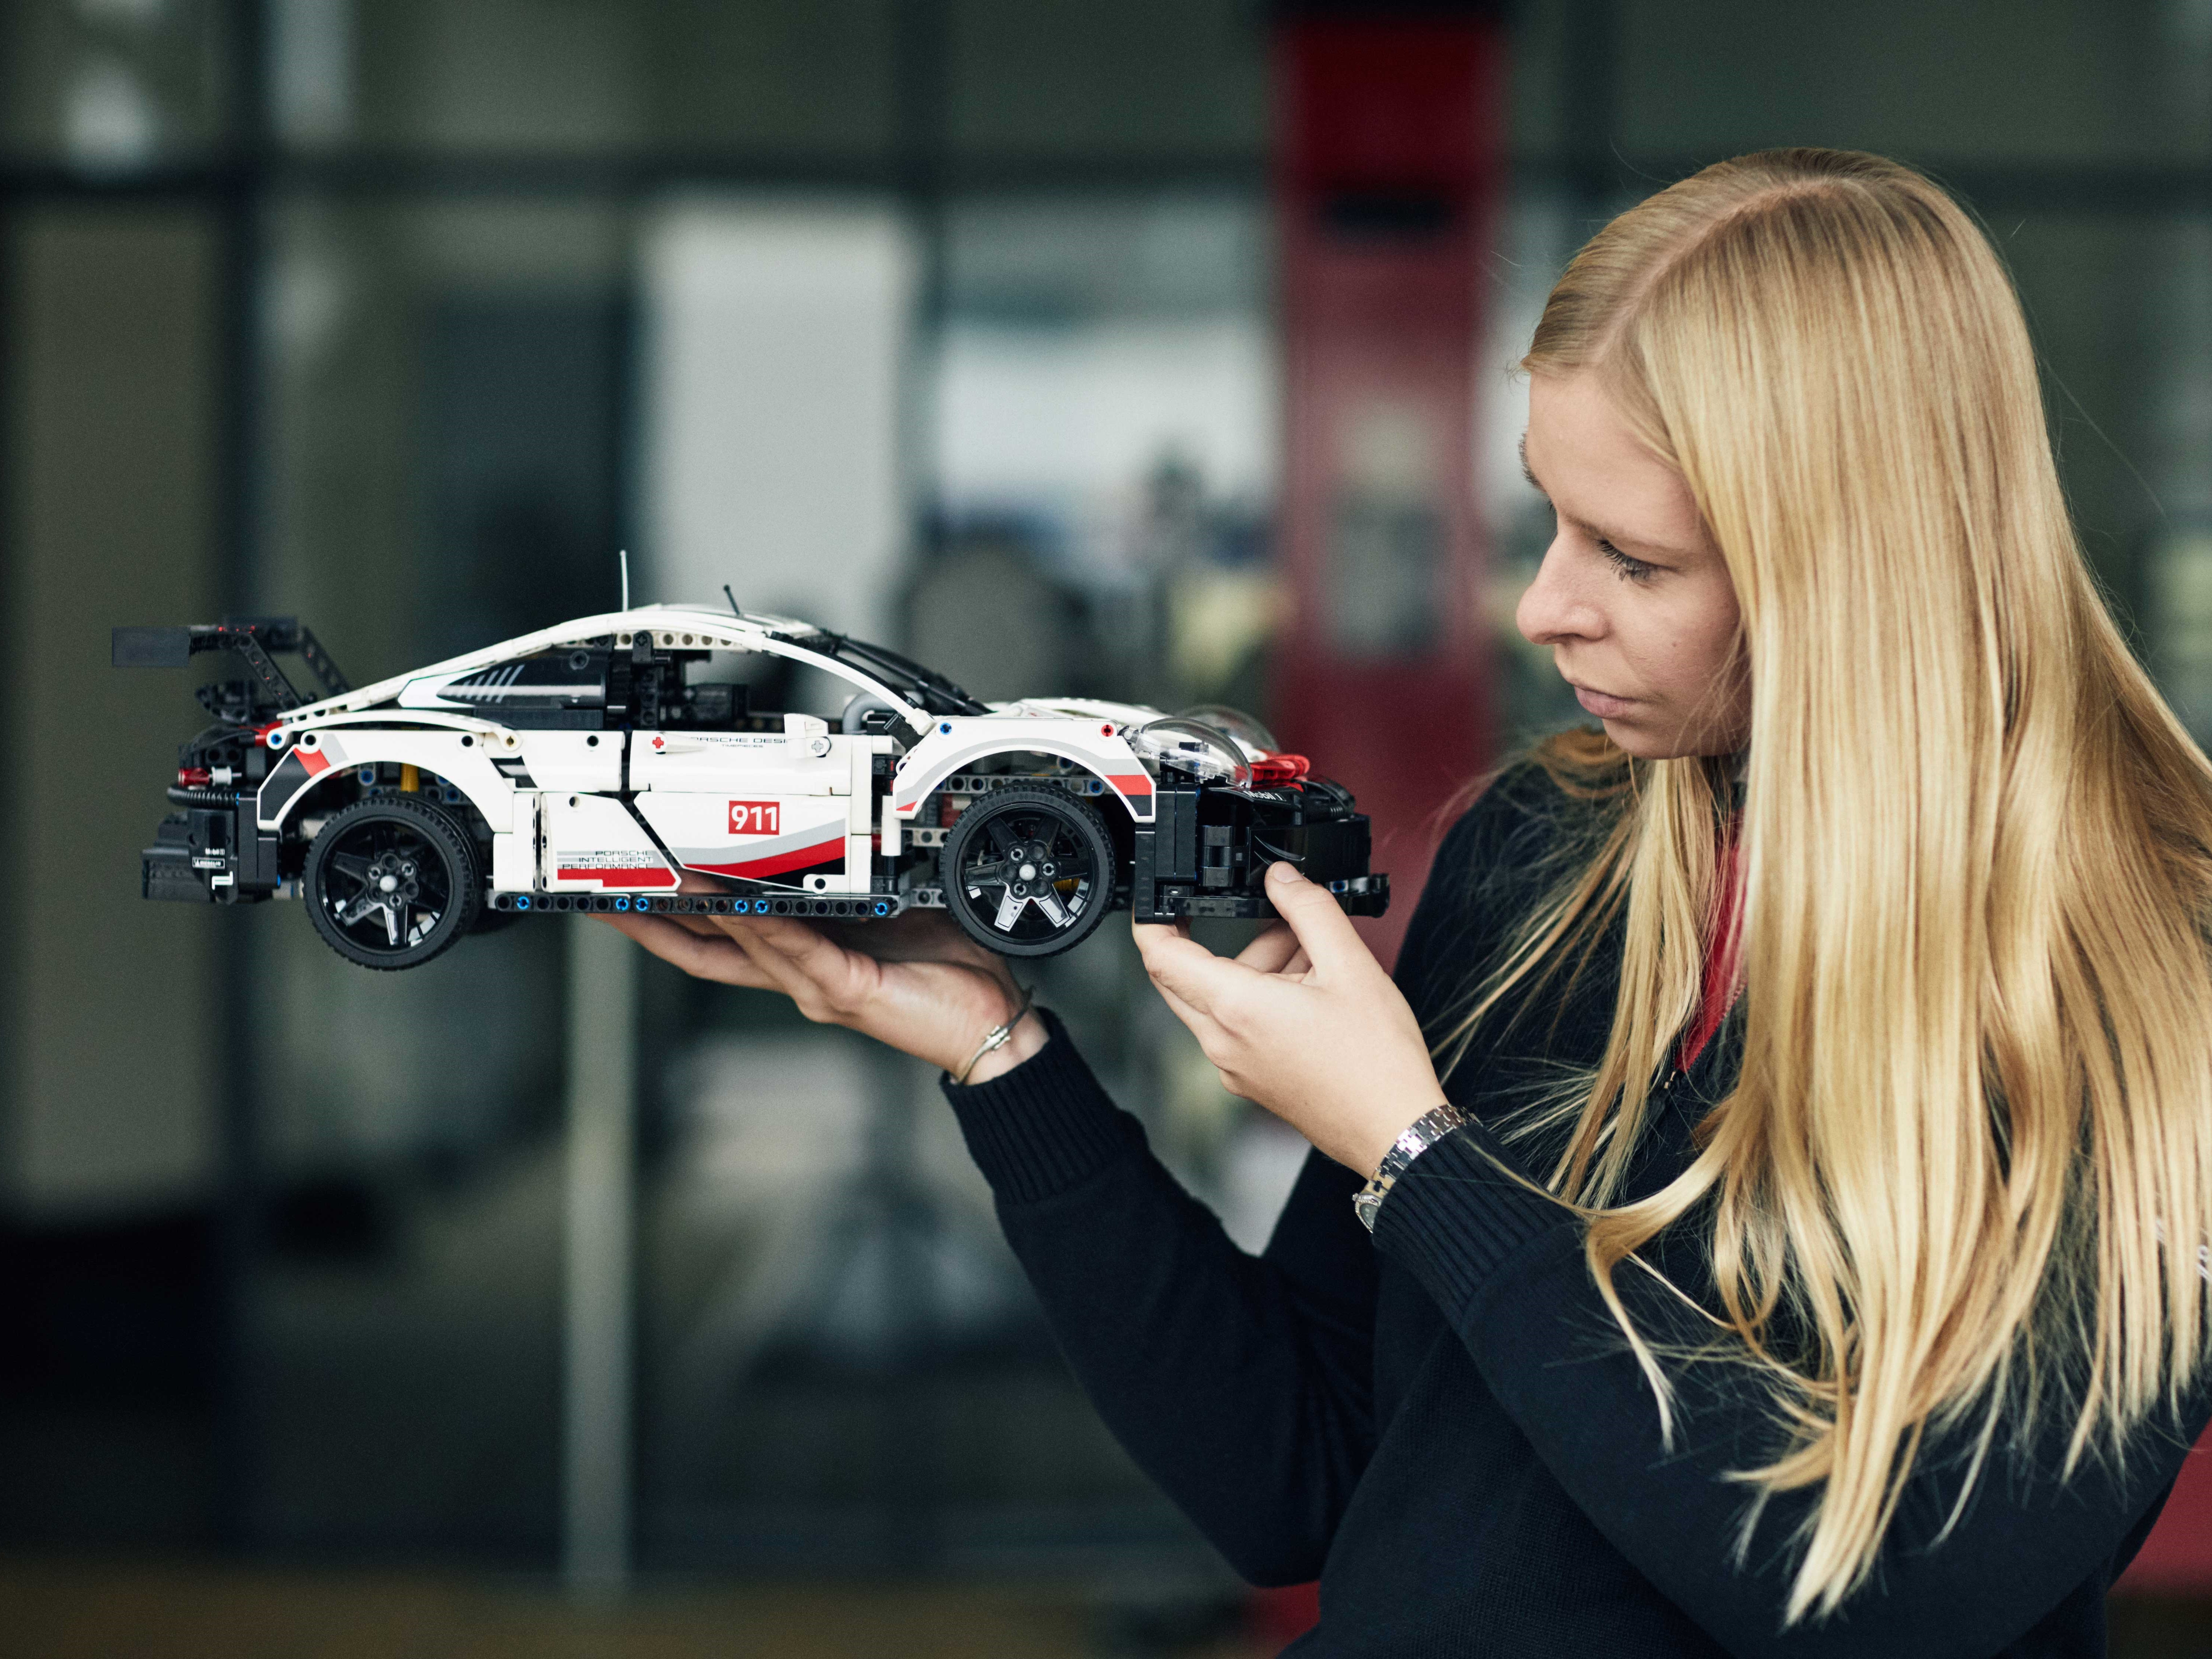 Porsche 911 RSR 42096 | Technic™ | Buy online at the Official LEGO® Shop US